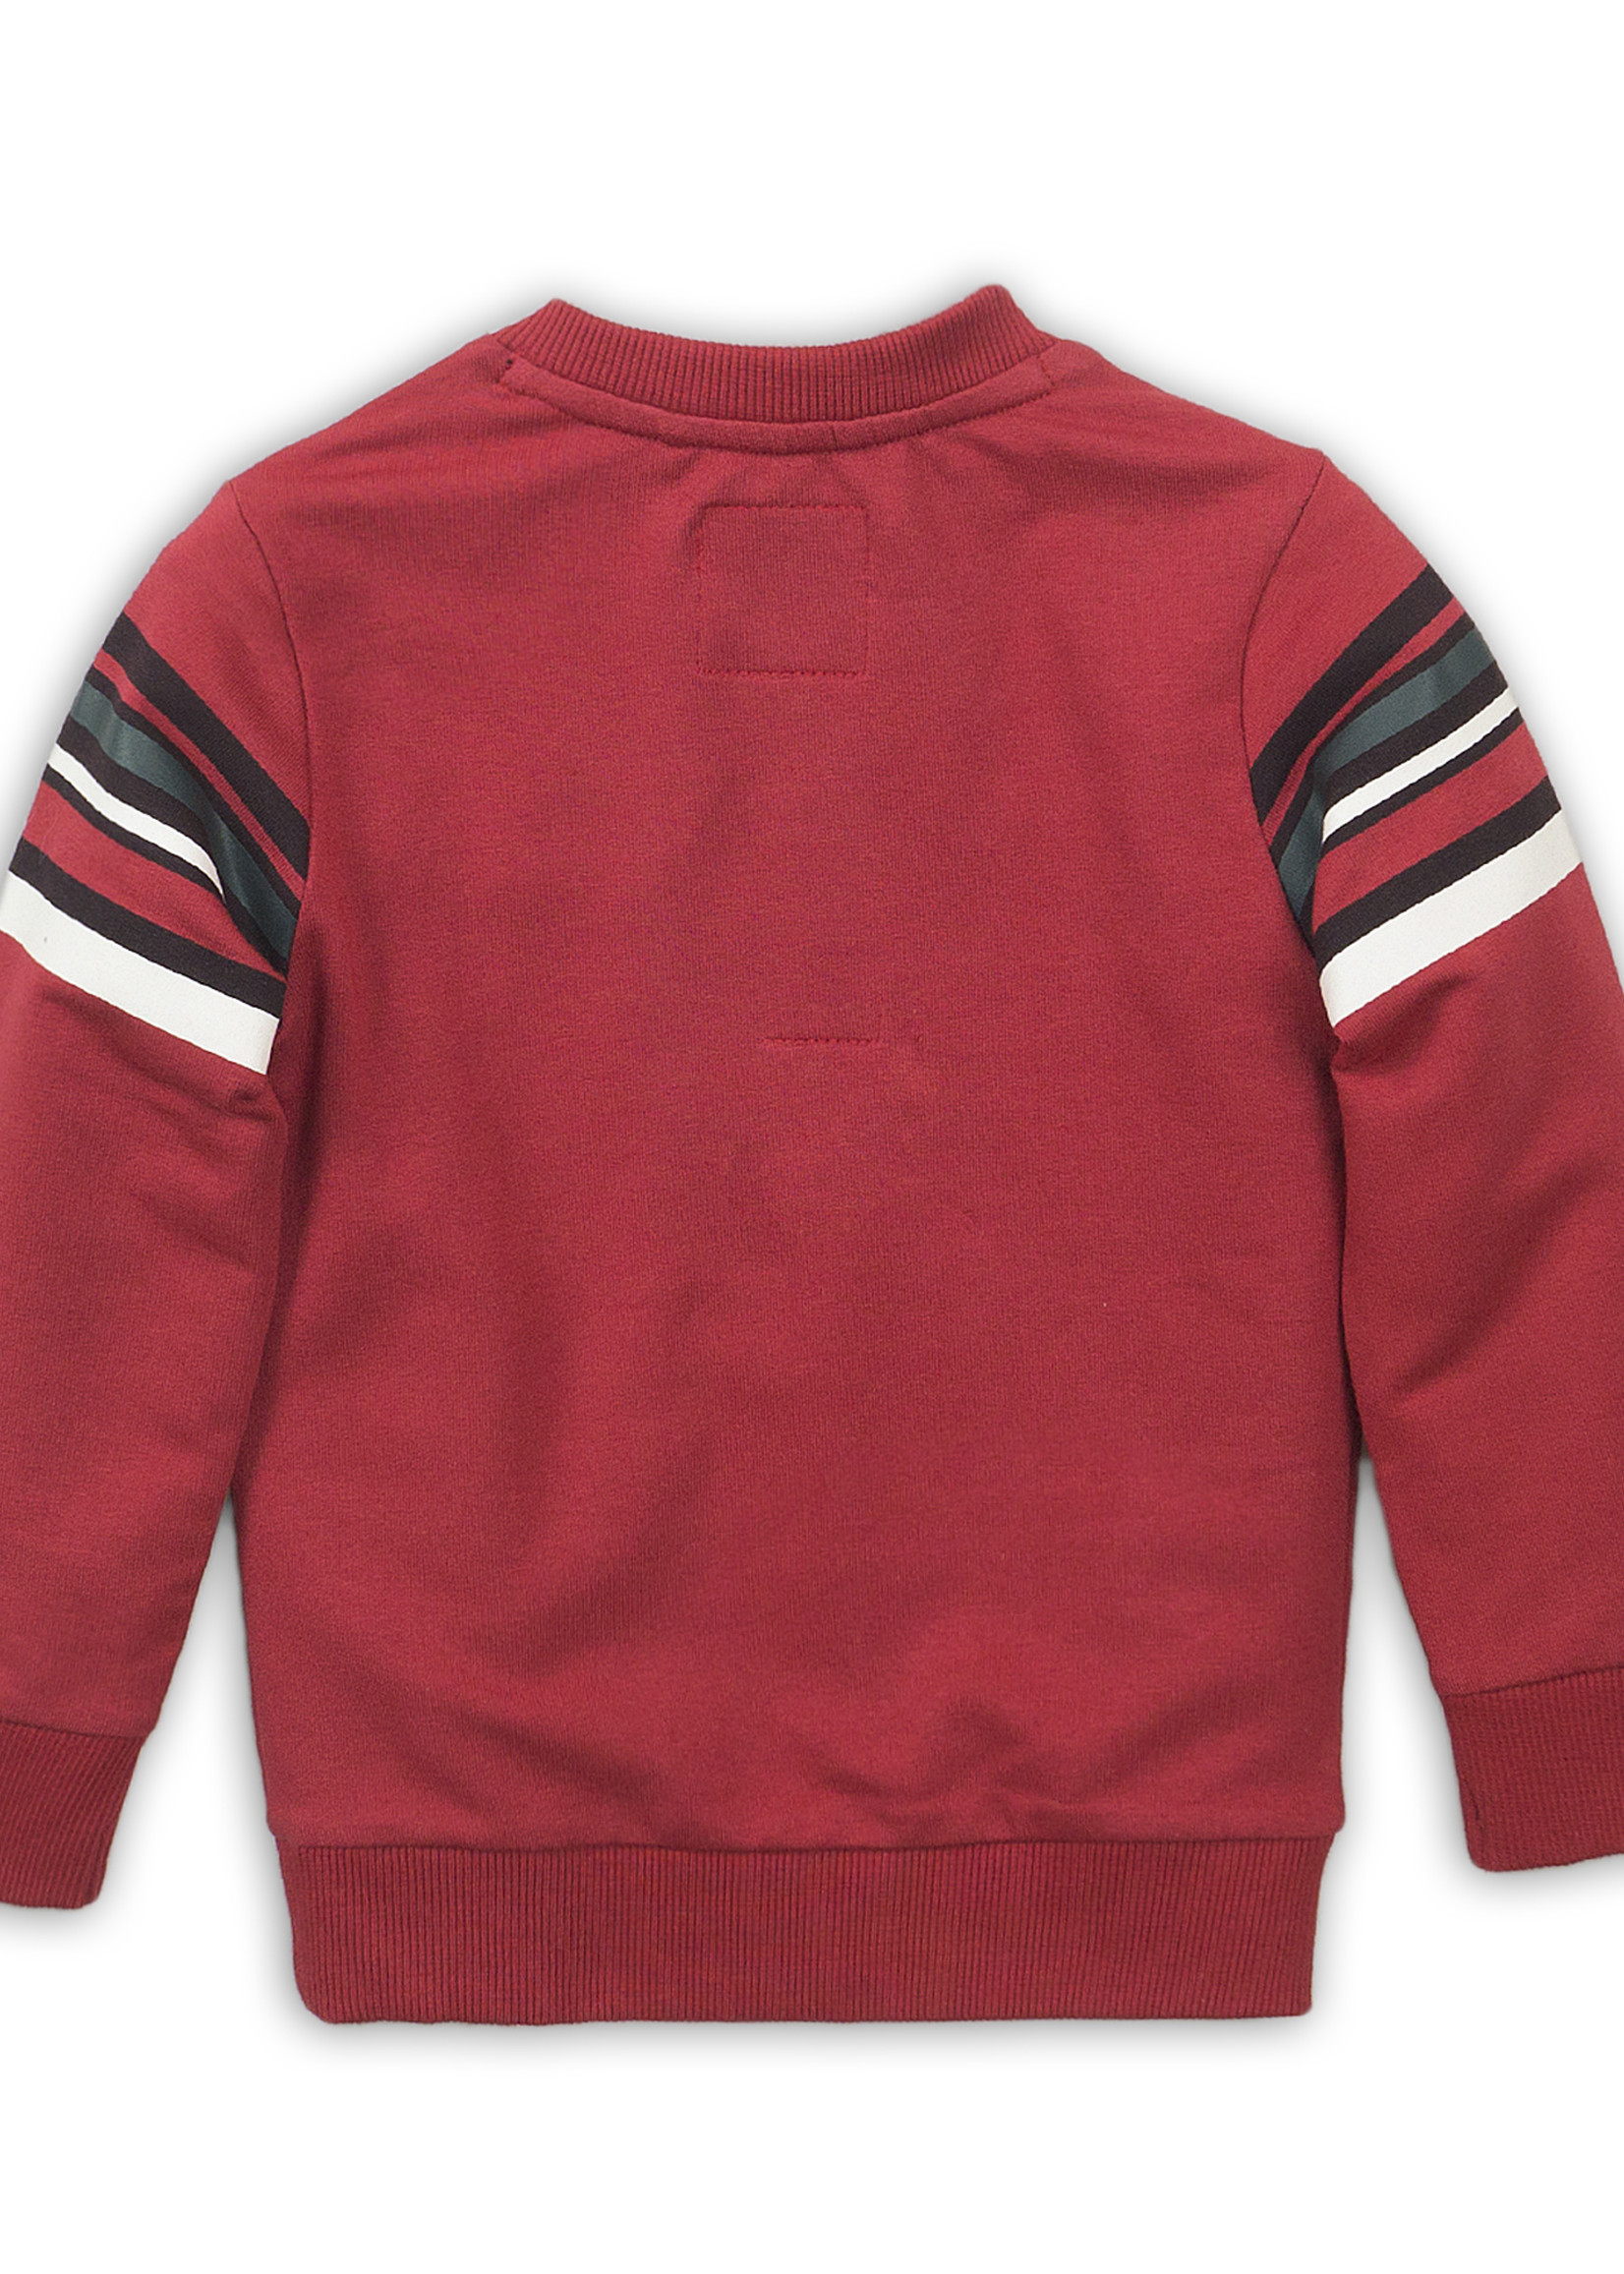 Koko Noko Sweater, Red